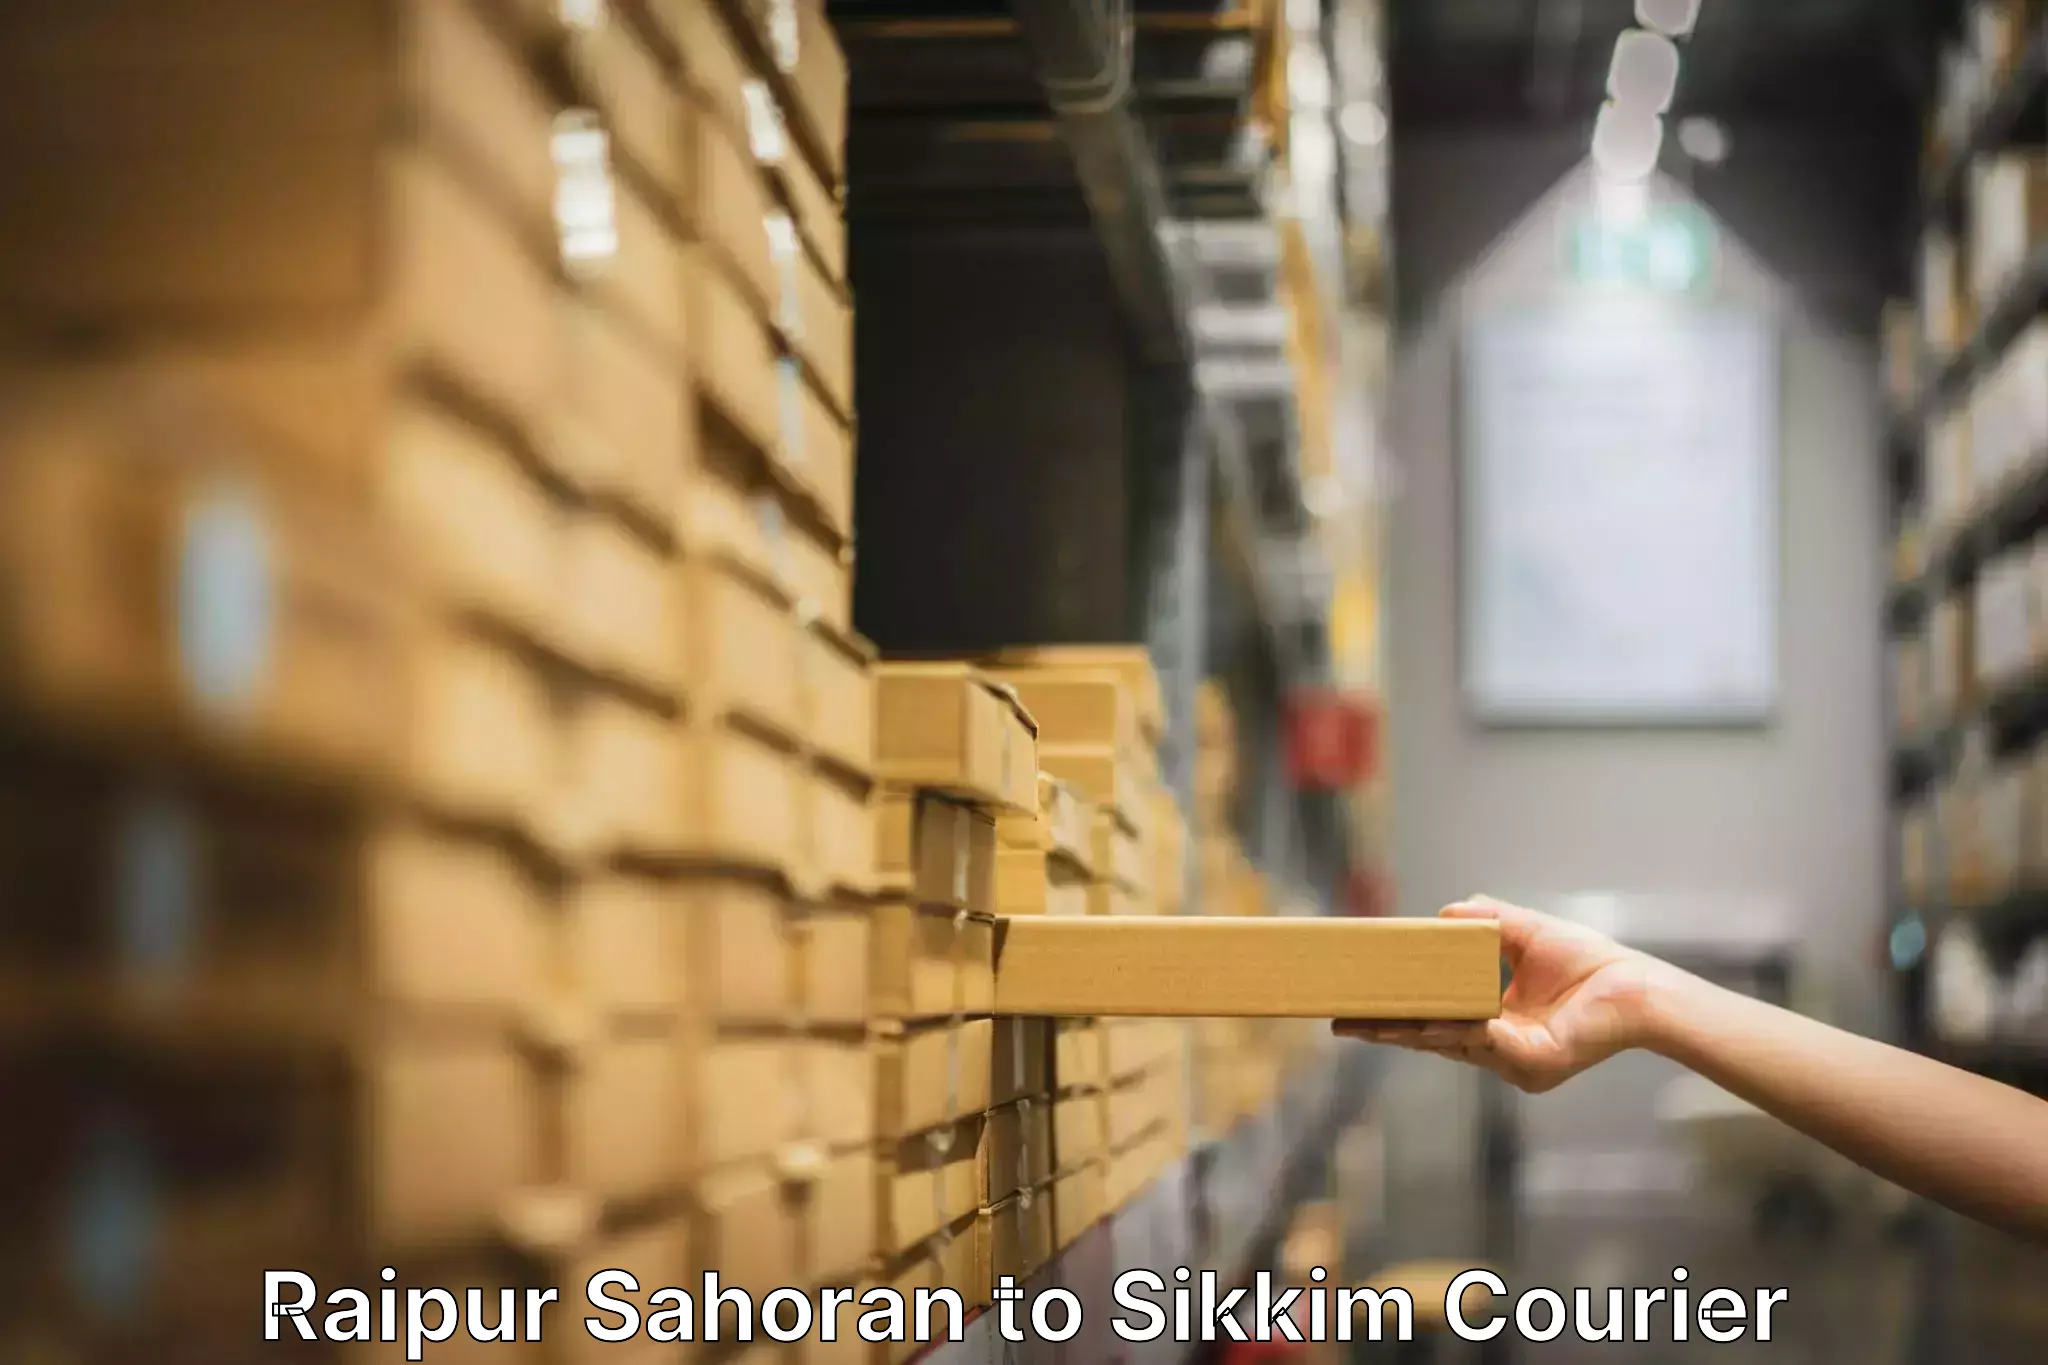 Professional moving company Raipur Sahoran to East Sikkim